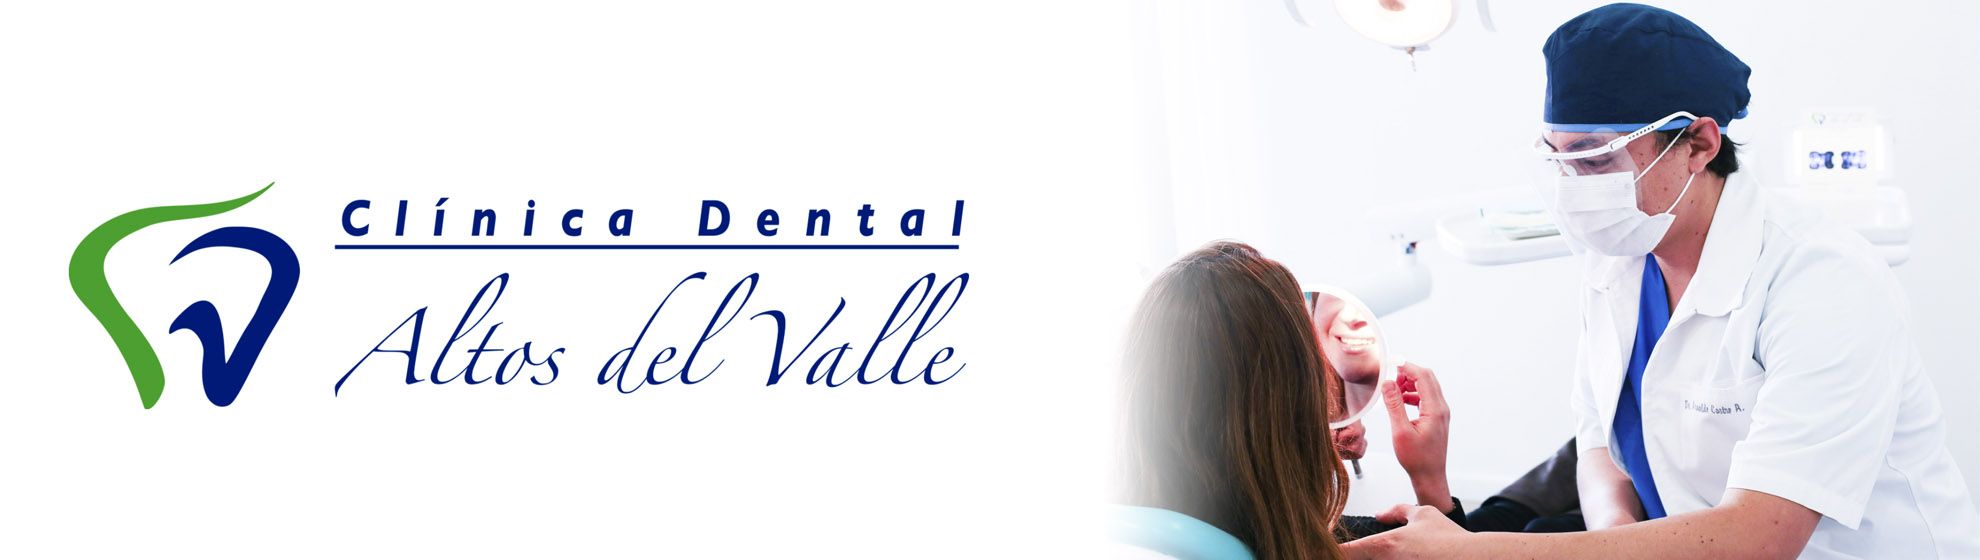 Clínica Dental Altos del Valle